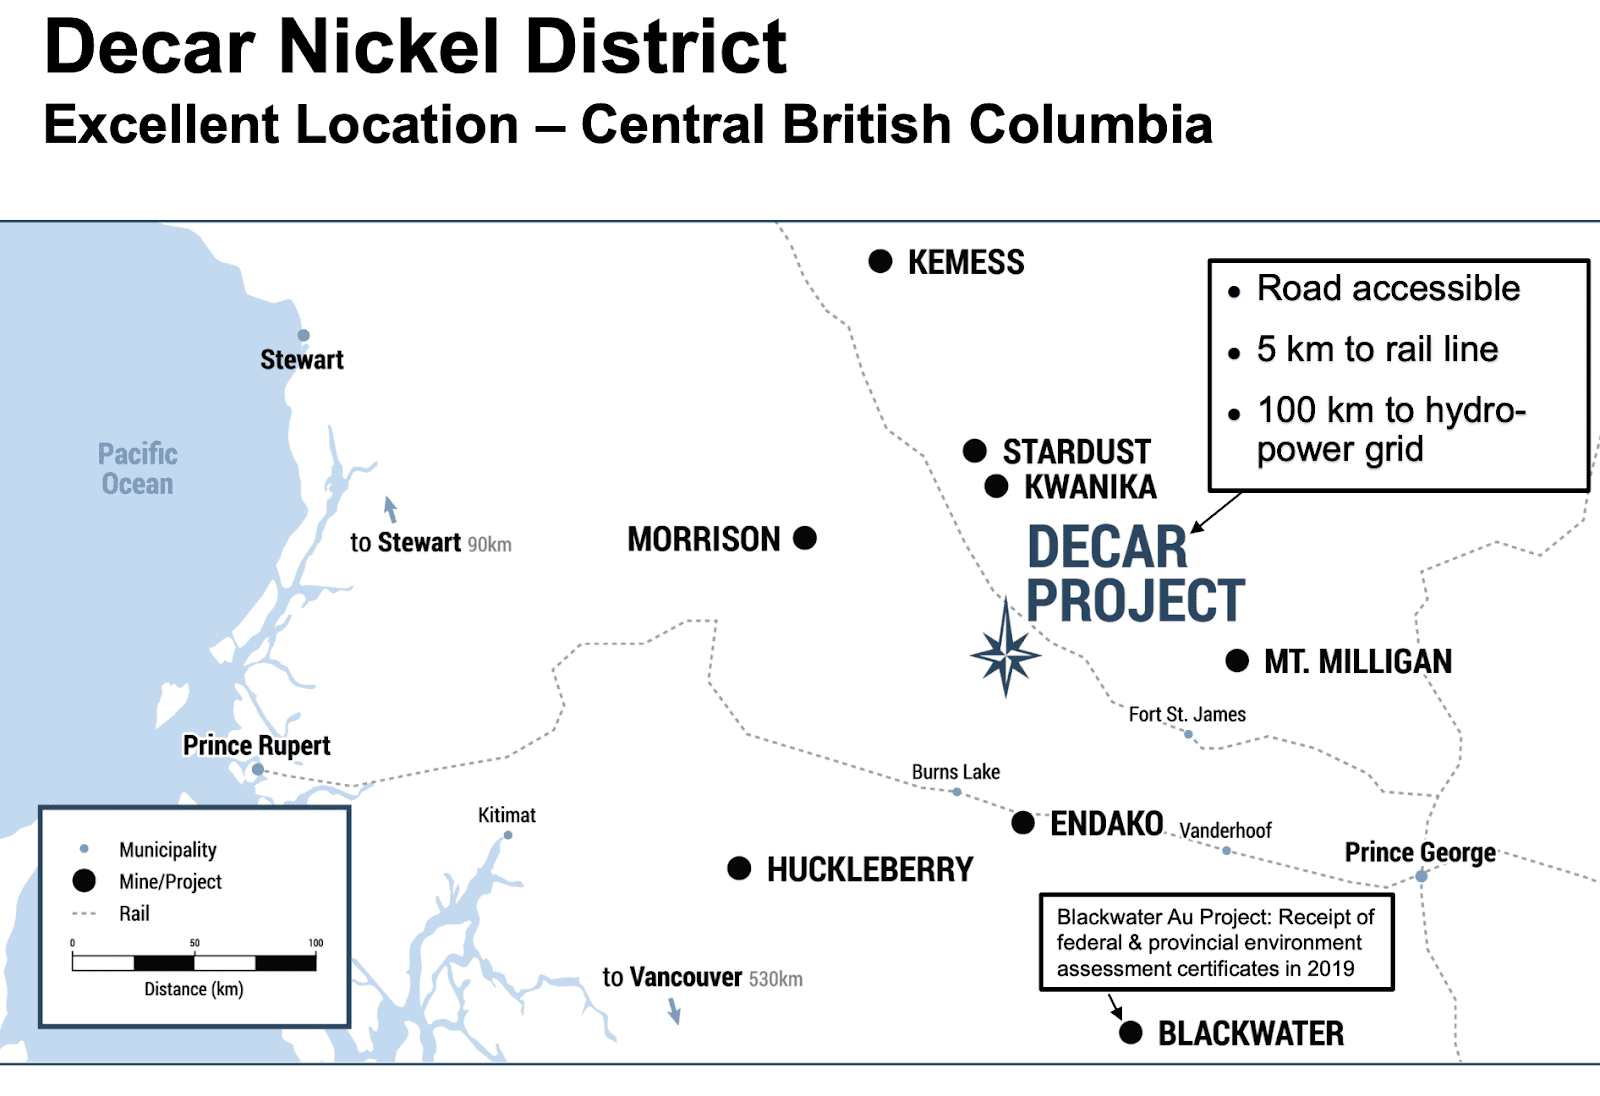 FPX Nickel Decar Nickel District